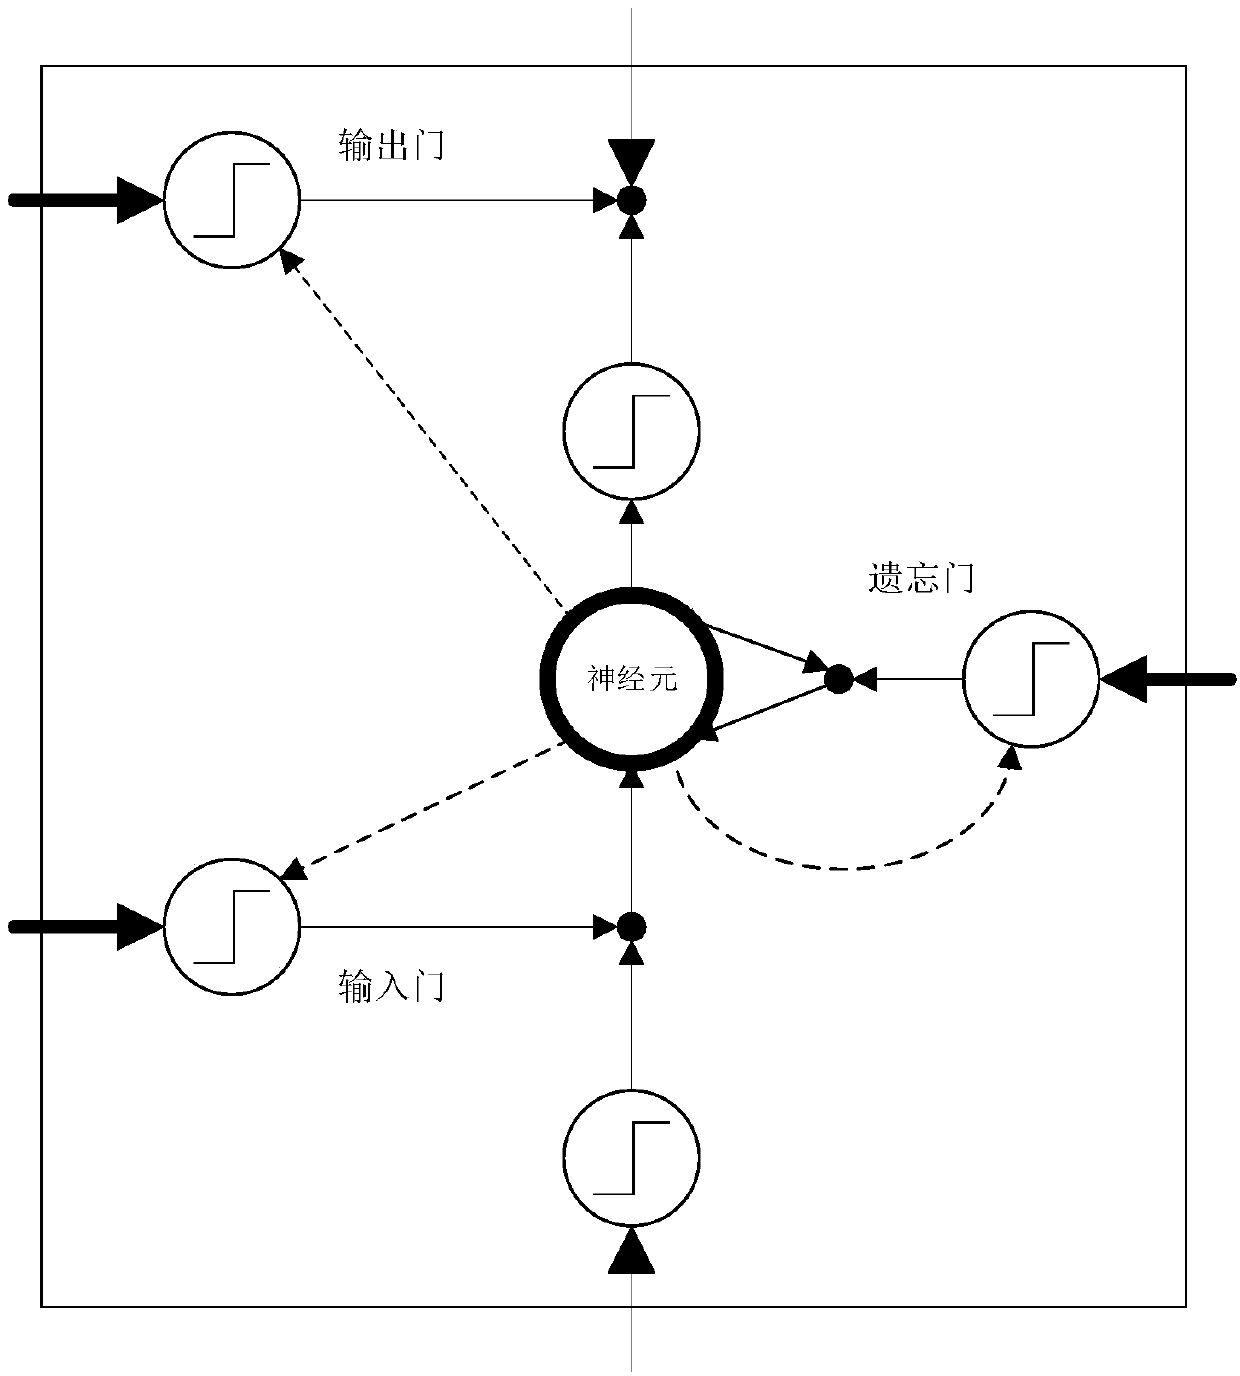 Geomagnetic field prediction method based on long-short term memory (LSTM) model recurrent neural network